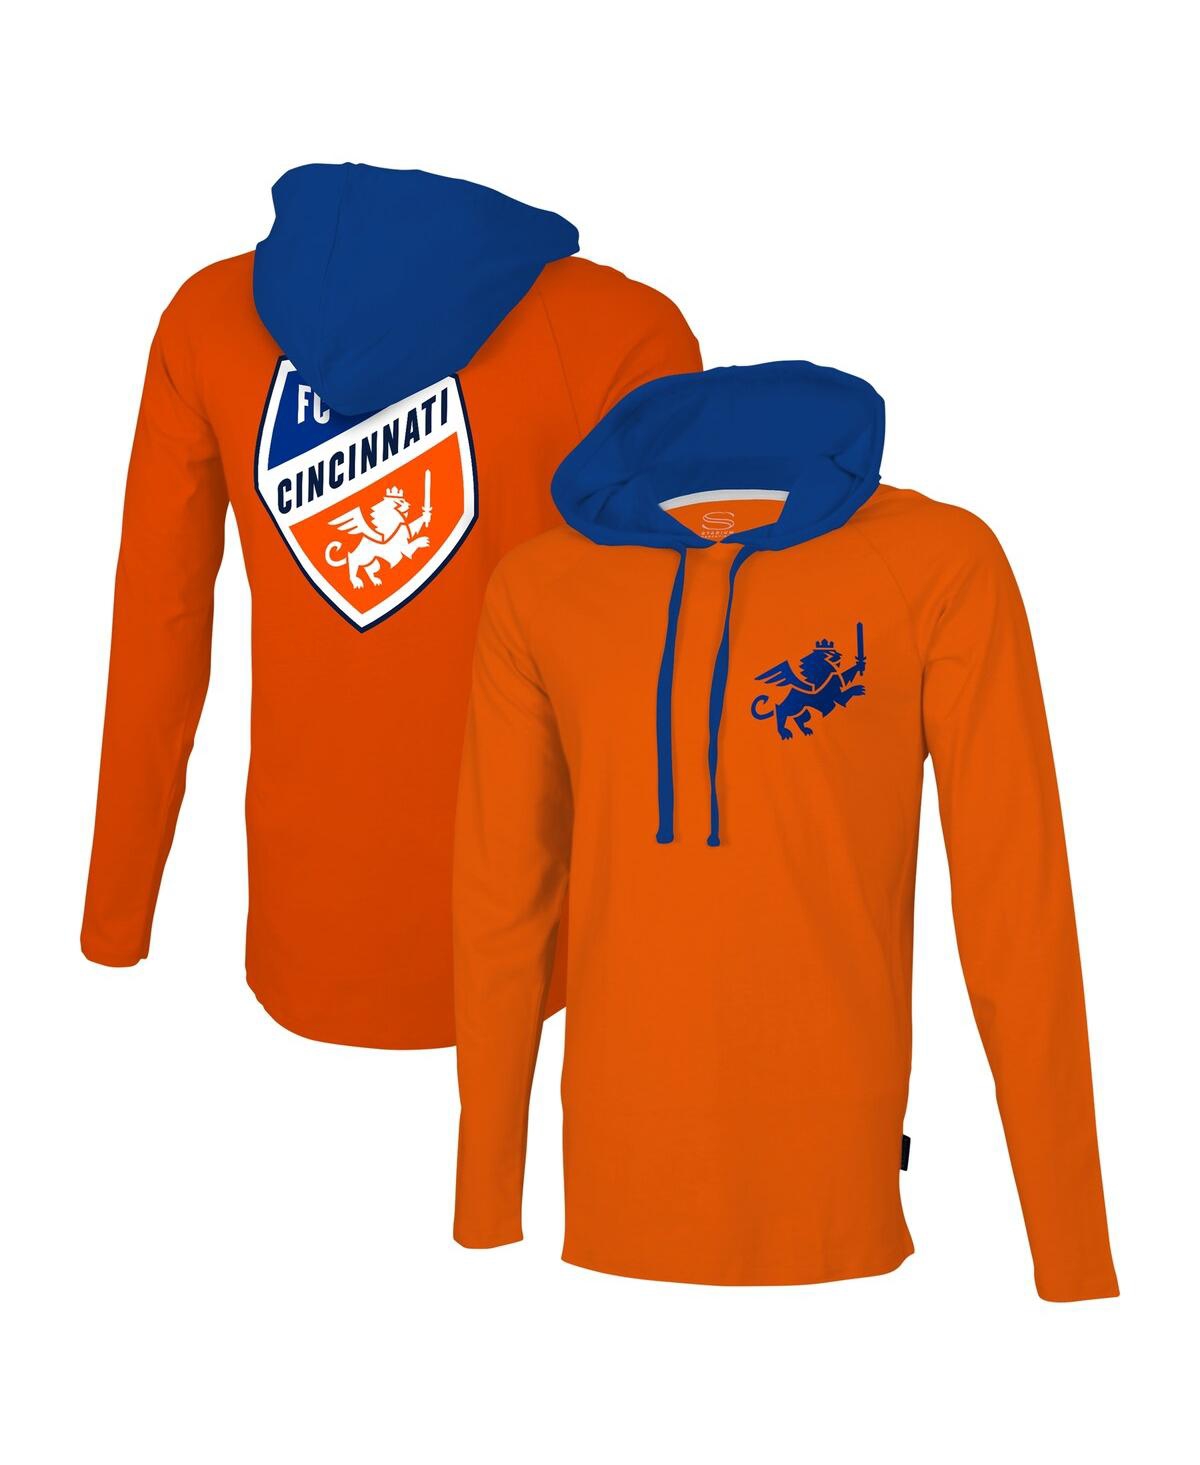 Men's Stadium Essentials Orange Fc Cincinnati Tradition Raglan Hoodie Long Sleeve T-shirt - Orange